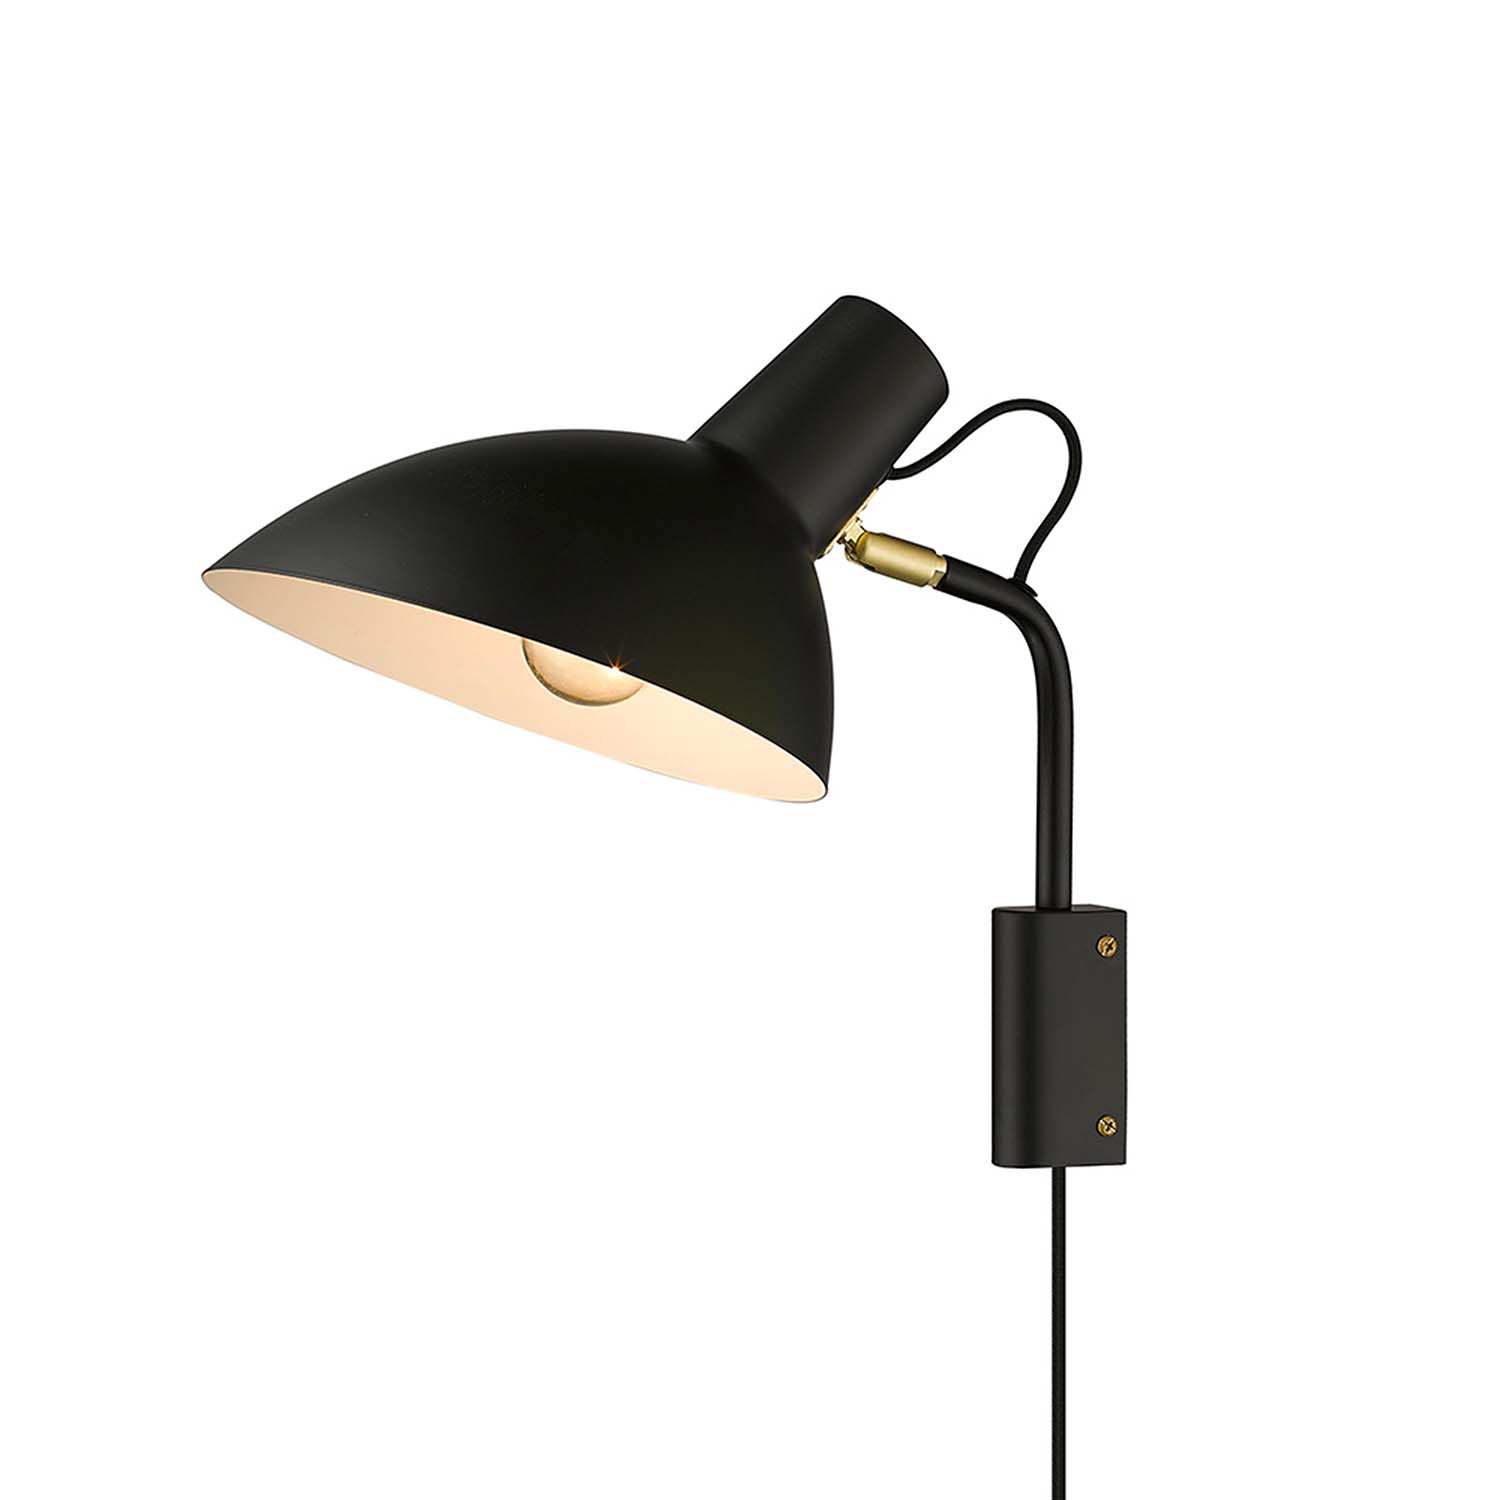 METROPOLE - Adjustable wall light in black or gold steel